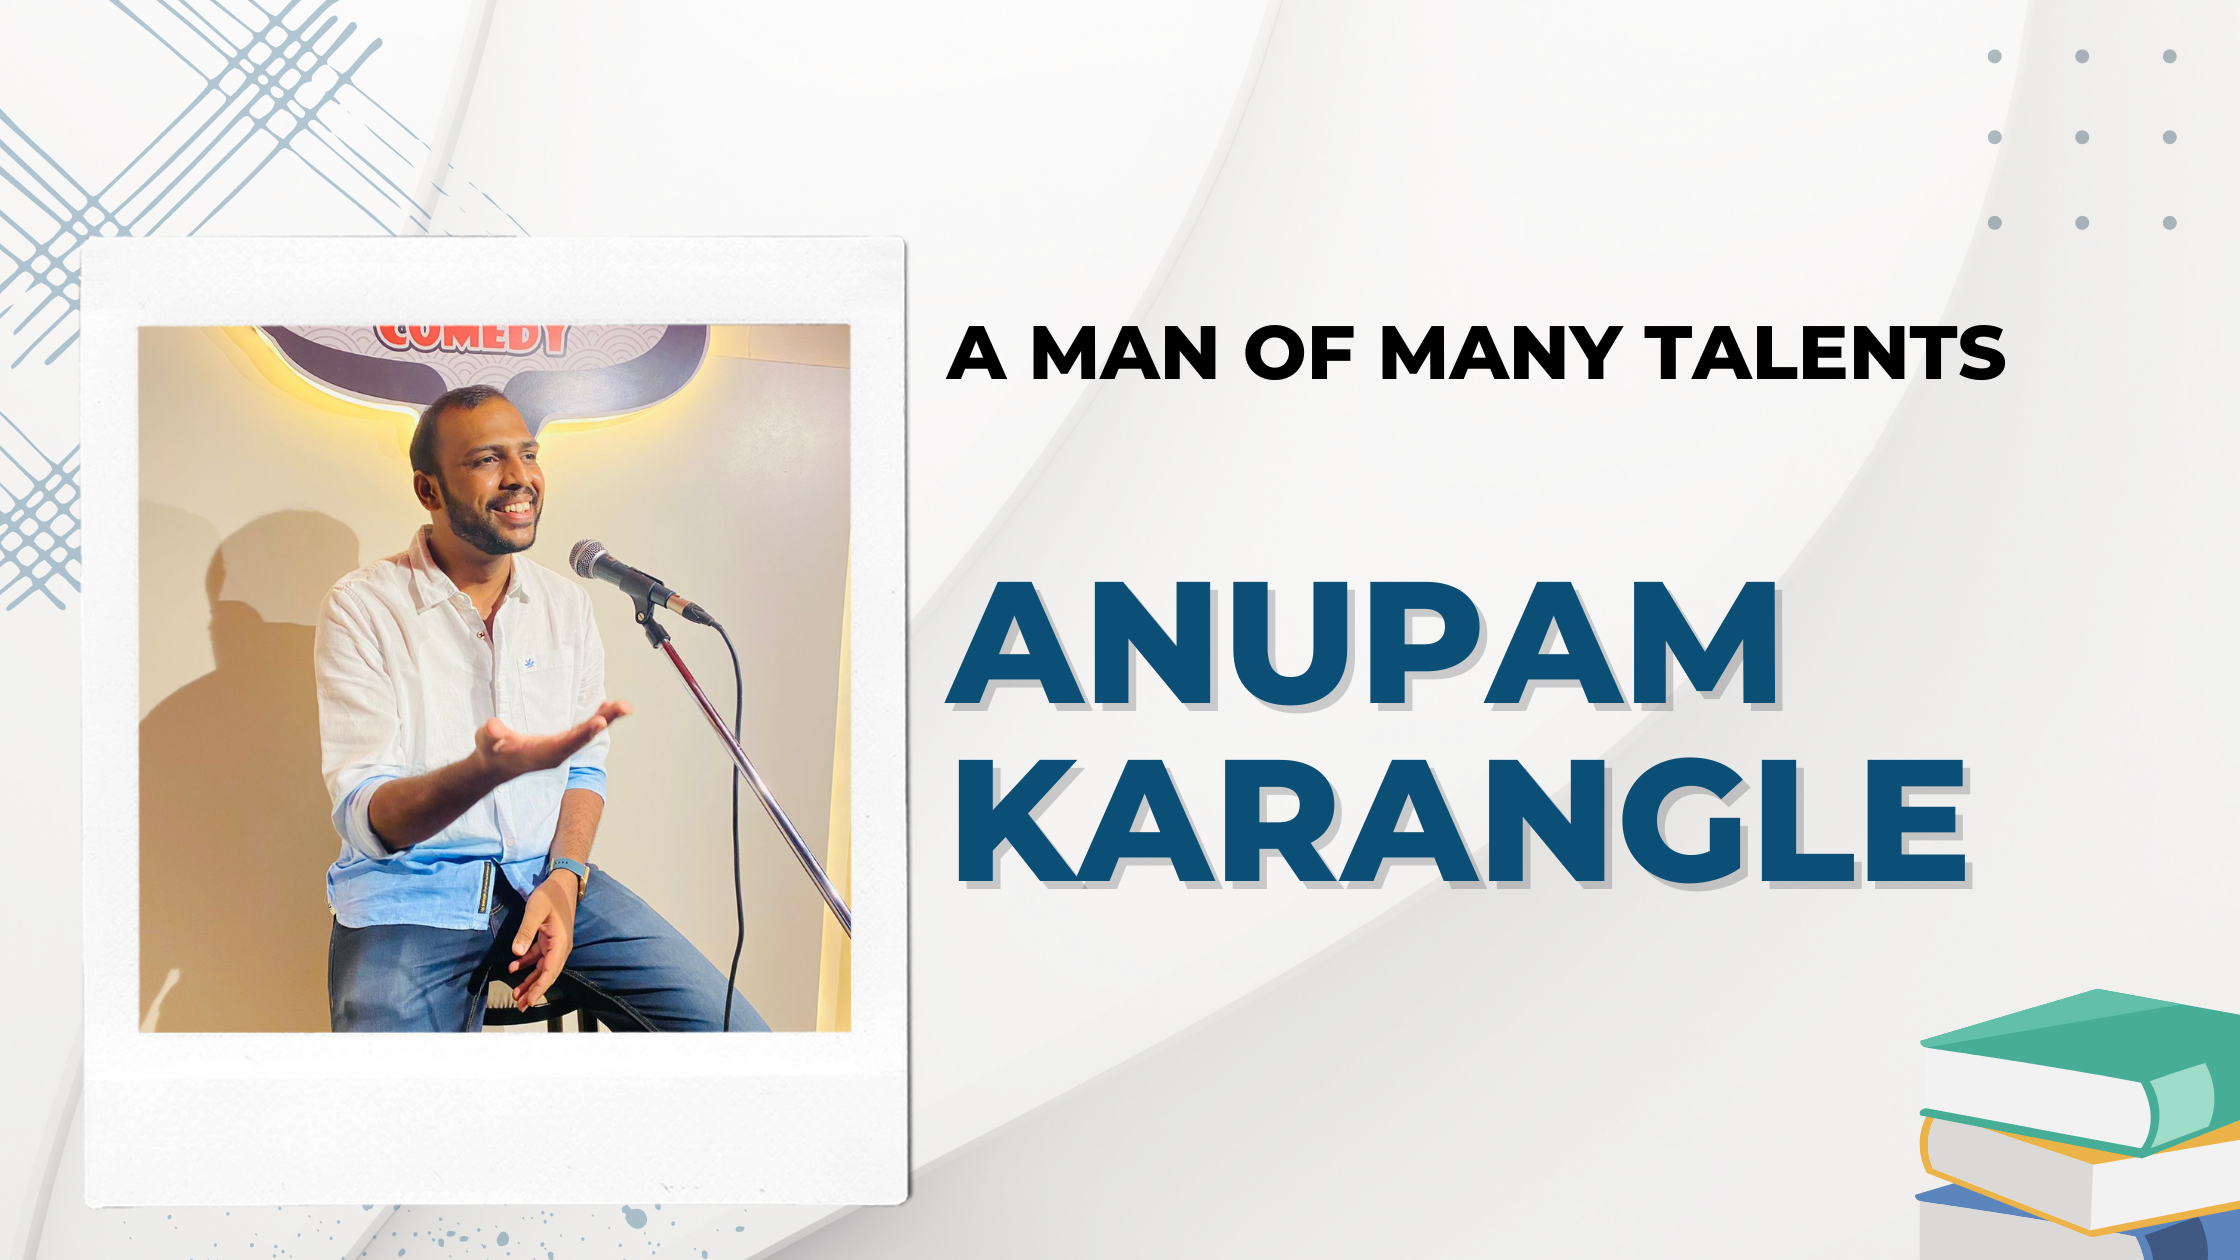 ANUPAM KARANGLE : A MAN OF MANY TALENTS